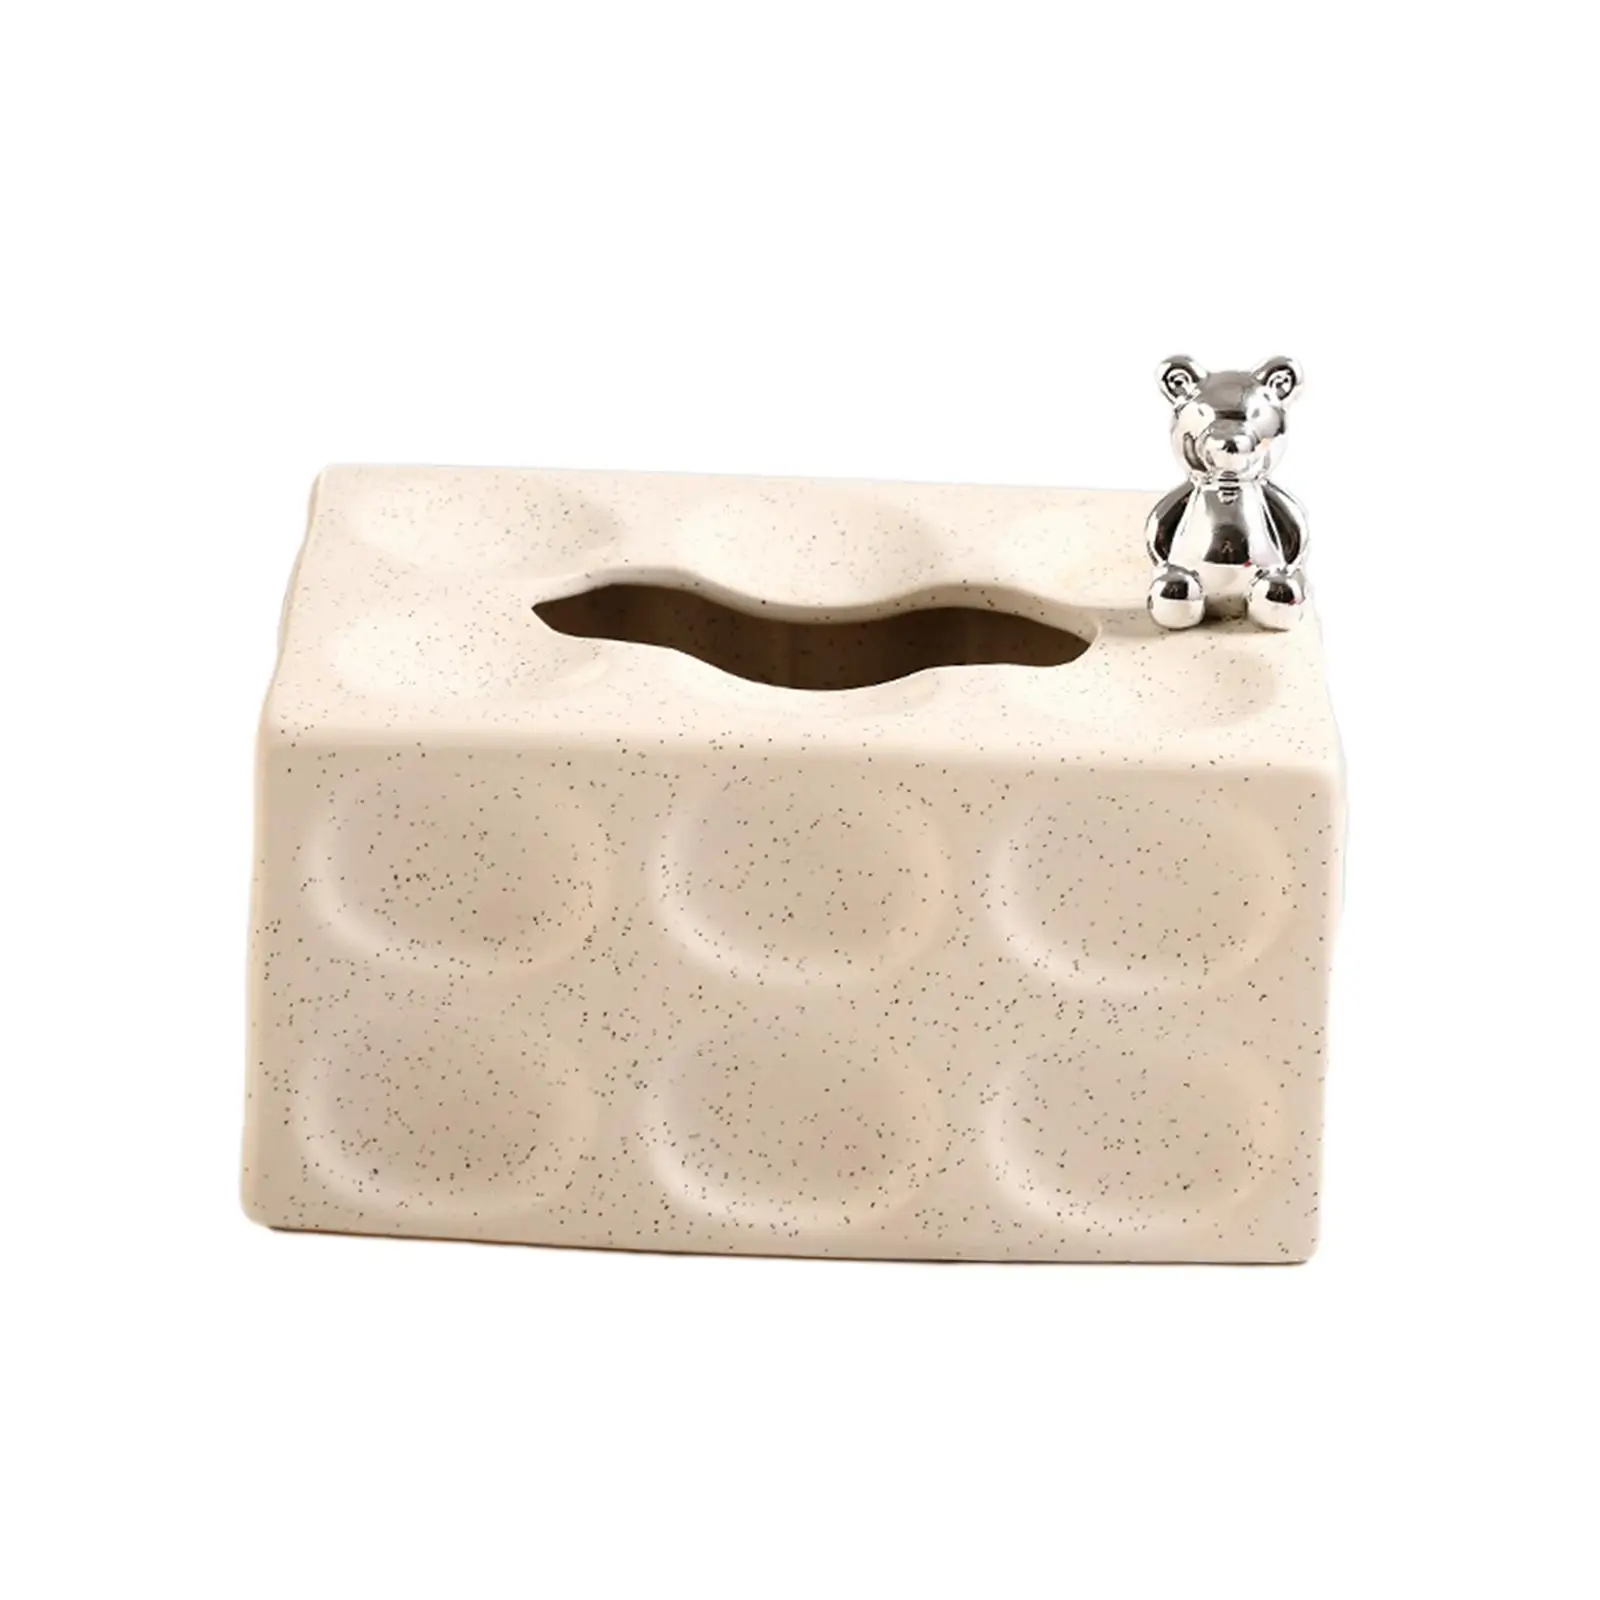 Ceramic Tissue Box Cover Holder Paper Storage Rectangle Facial Tissue Paper Box Cover for Countertop Vanity Bedroom Decor